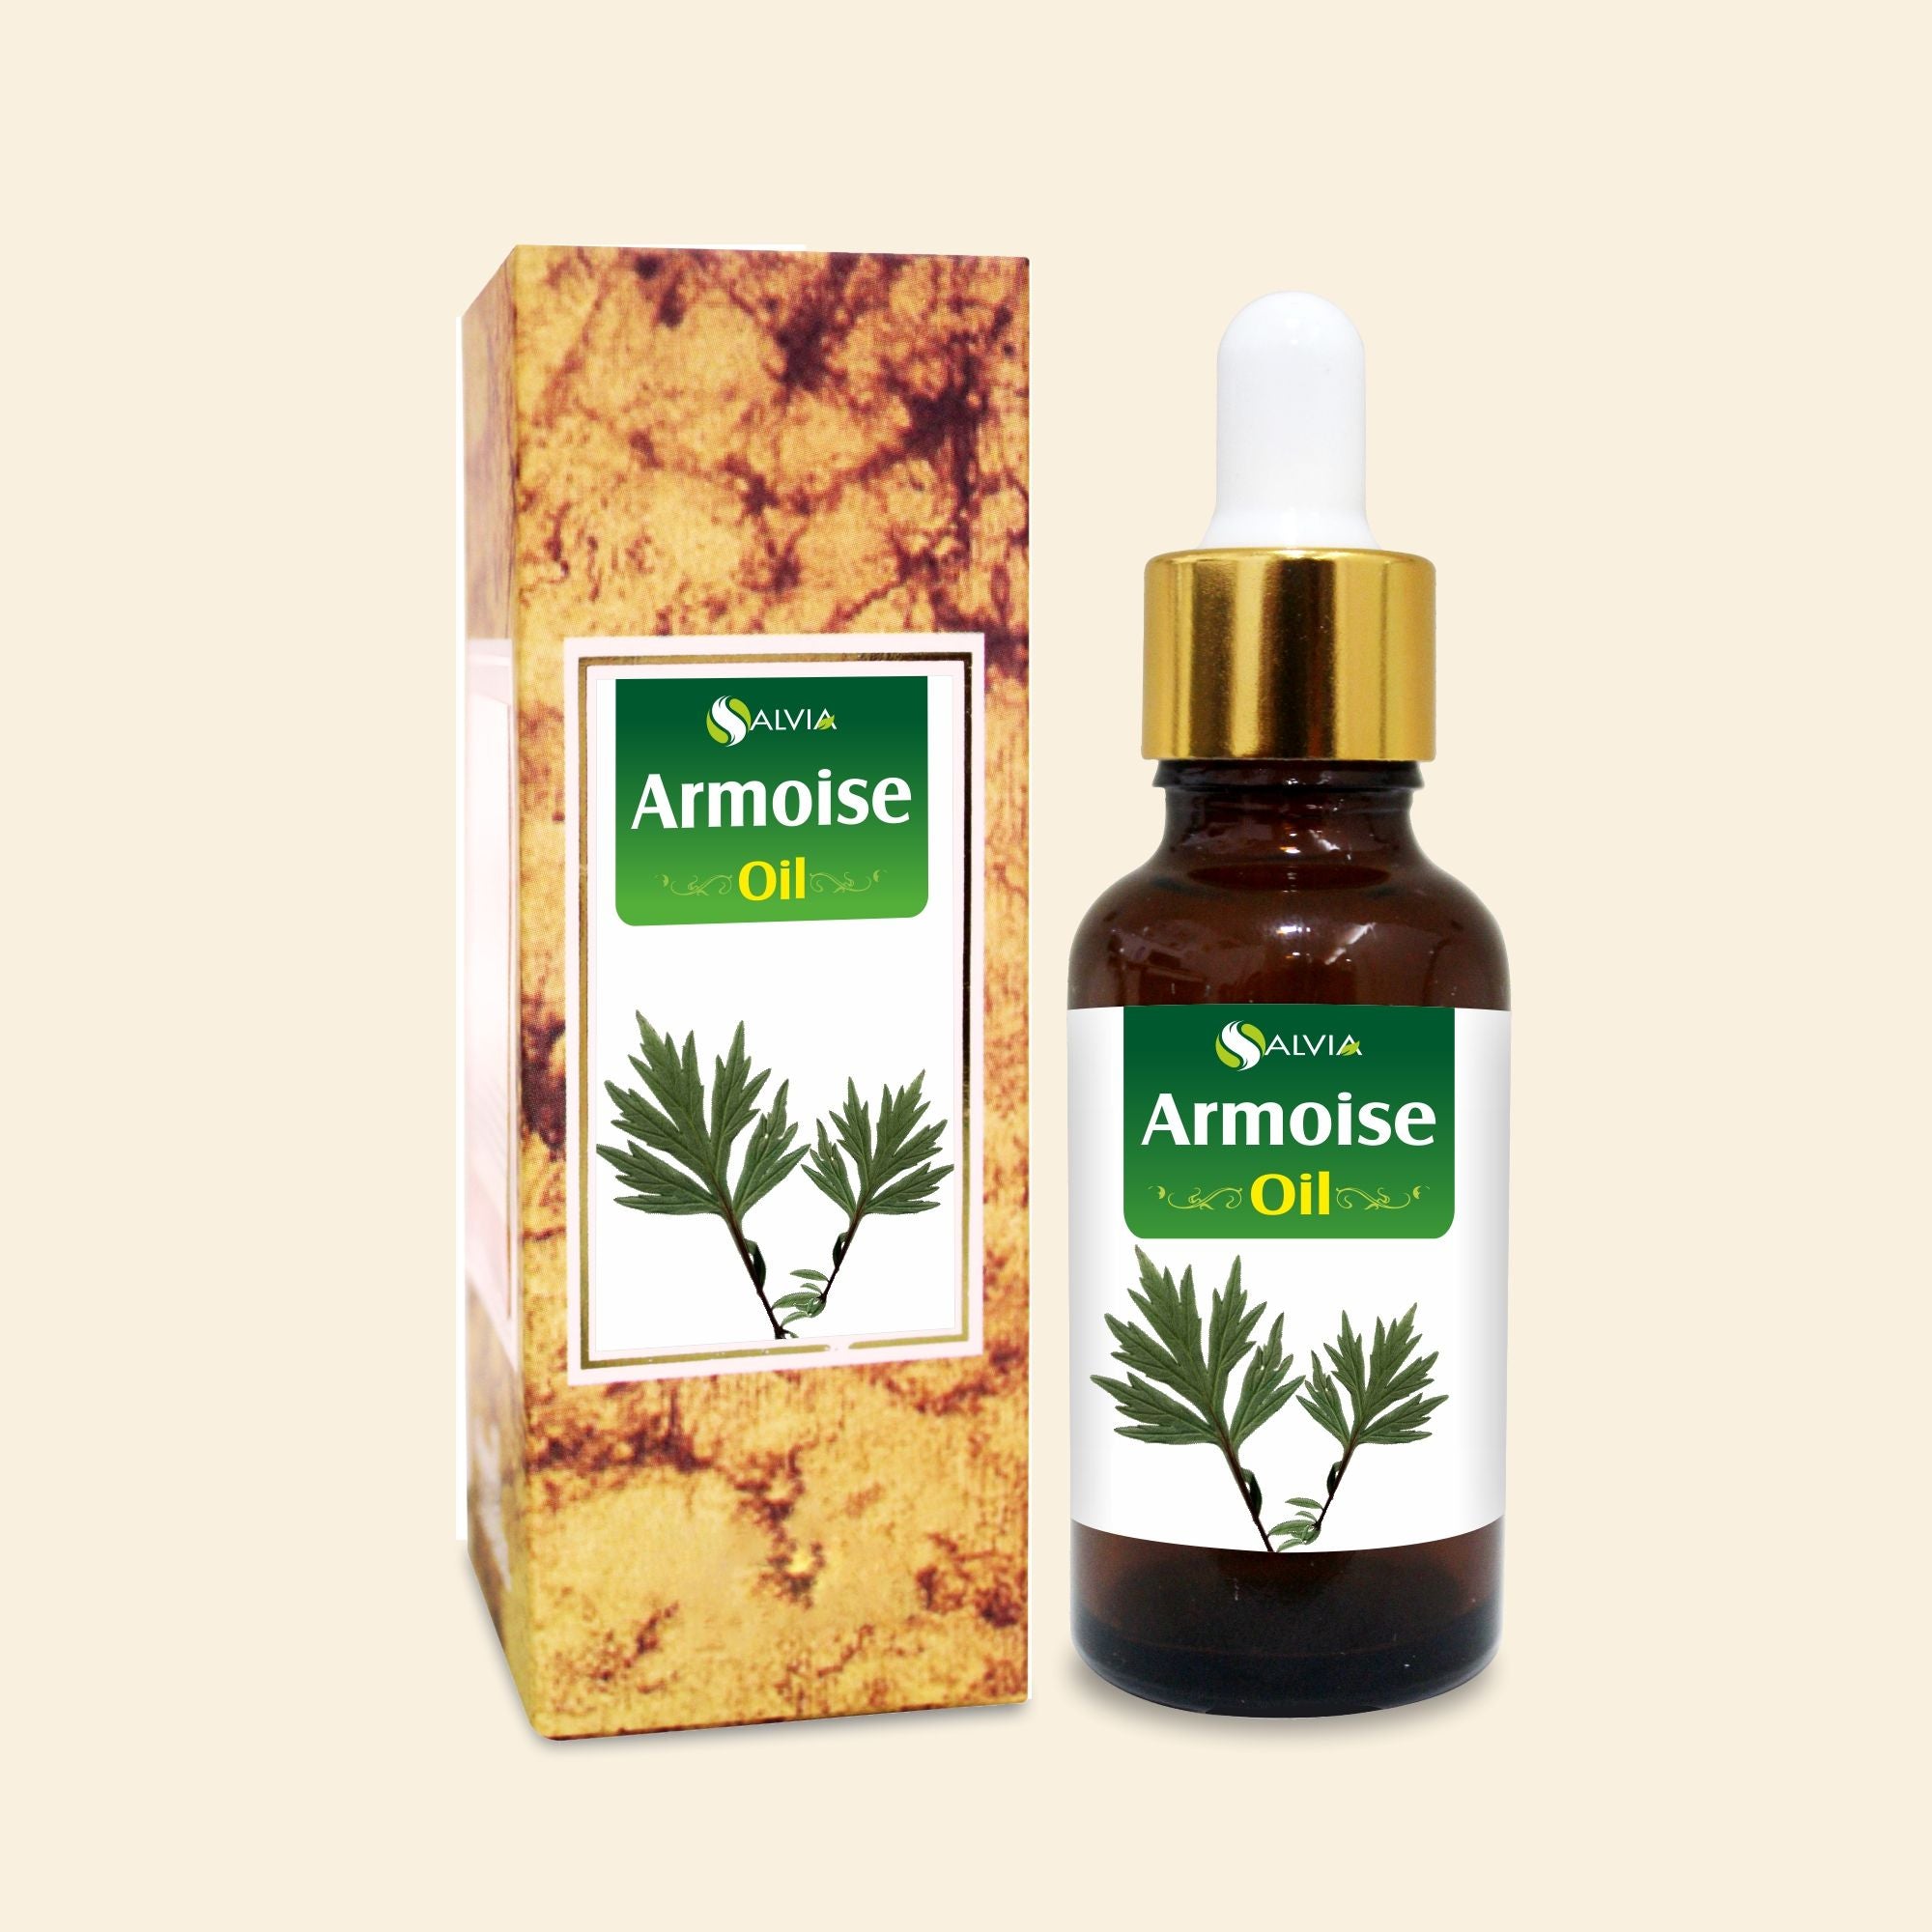 Salvia Natural Essential Oils Armoise Oil (Pimpinella Anisum) 100% Natural Pure Essential Oil